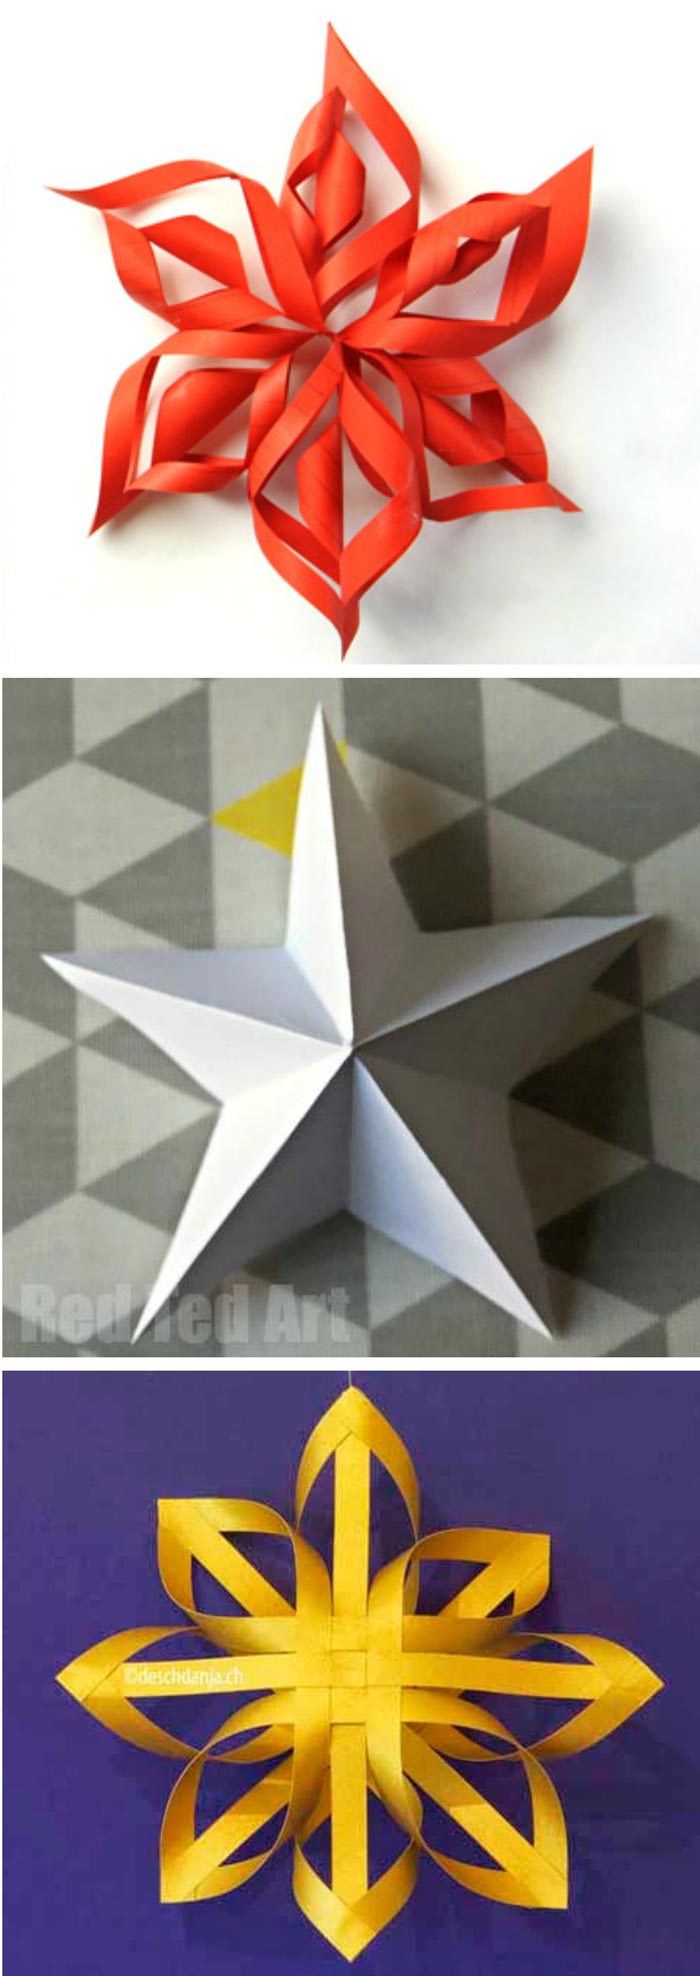 3 ways to make 3D Paper Stars